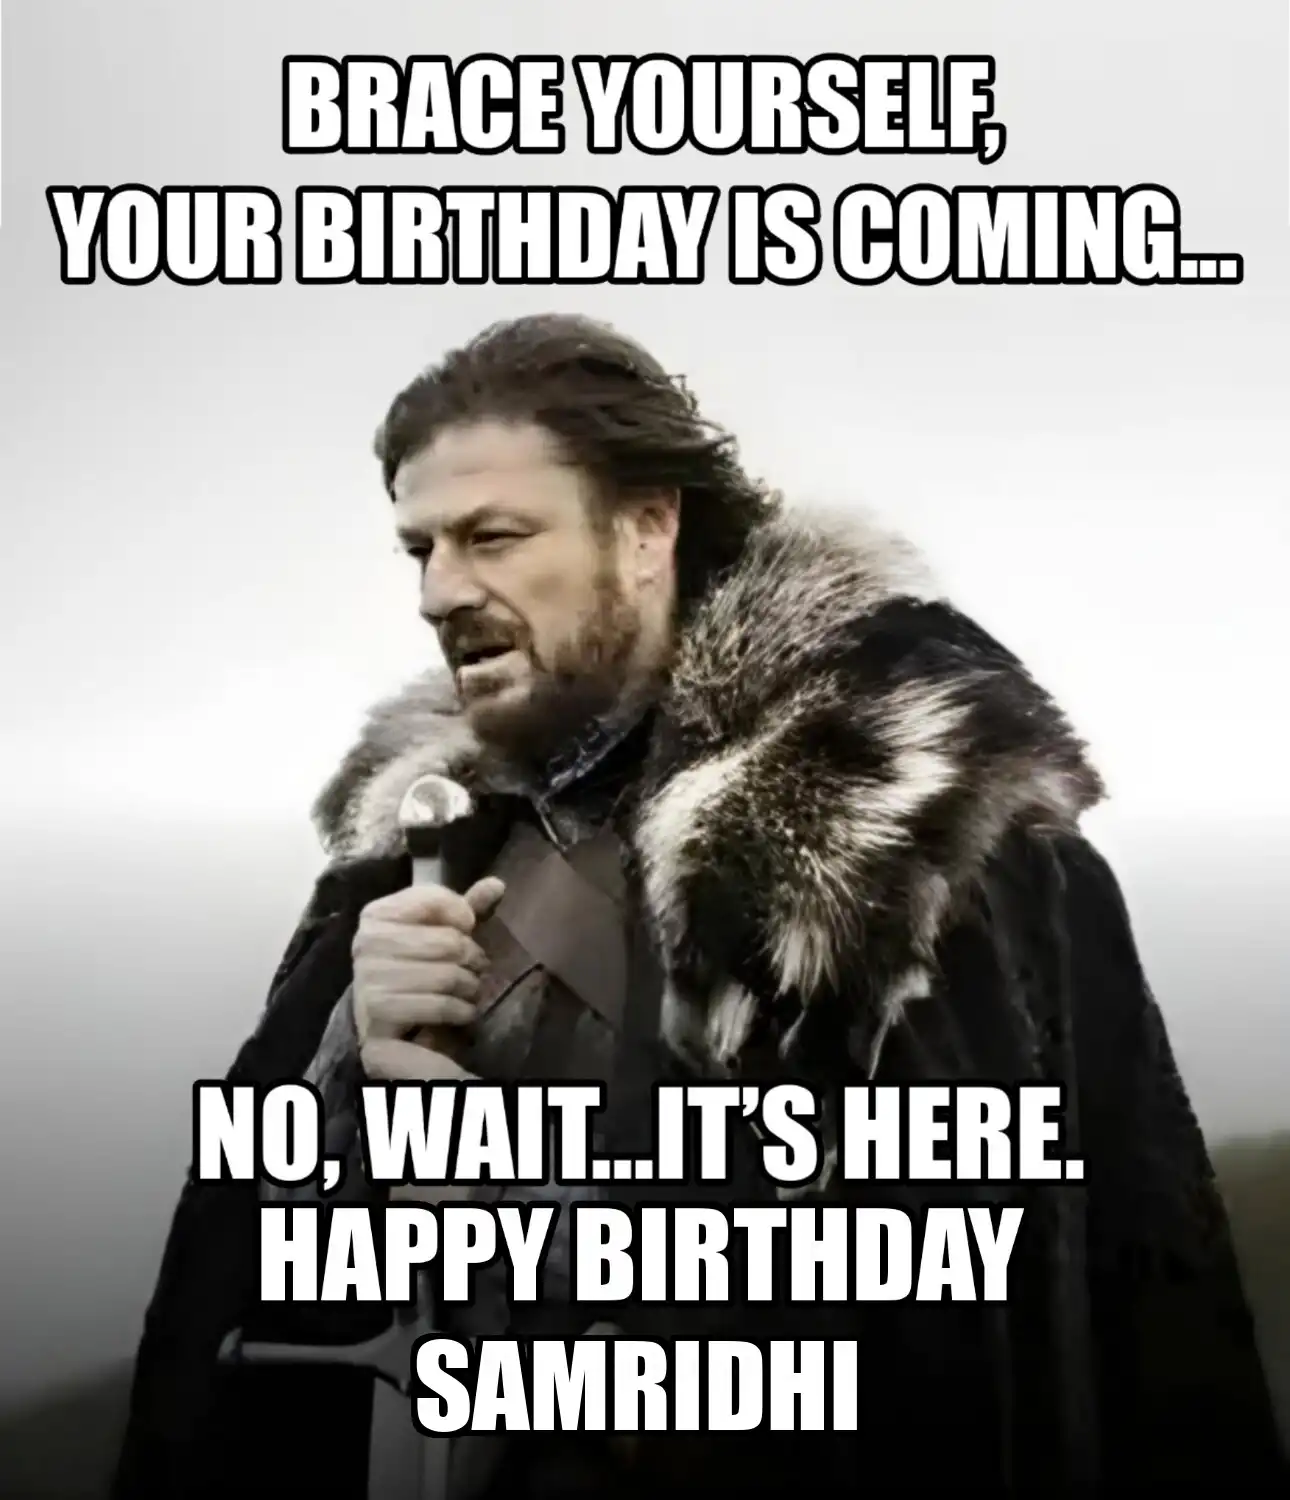 Happy Birthday Samridhi Brace Yourself Your Birthday Is Coming Meme